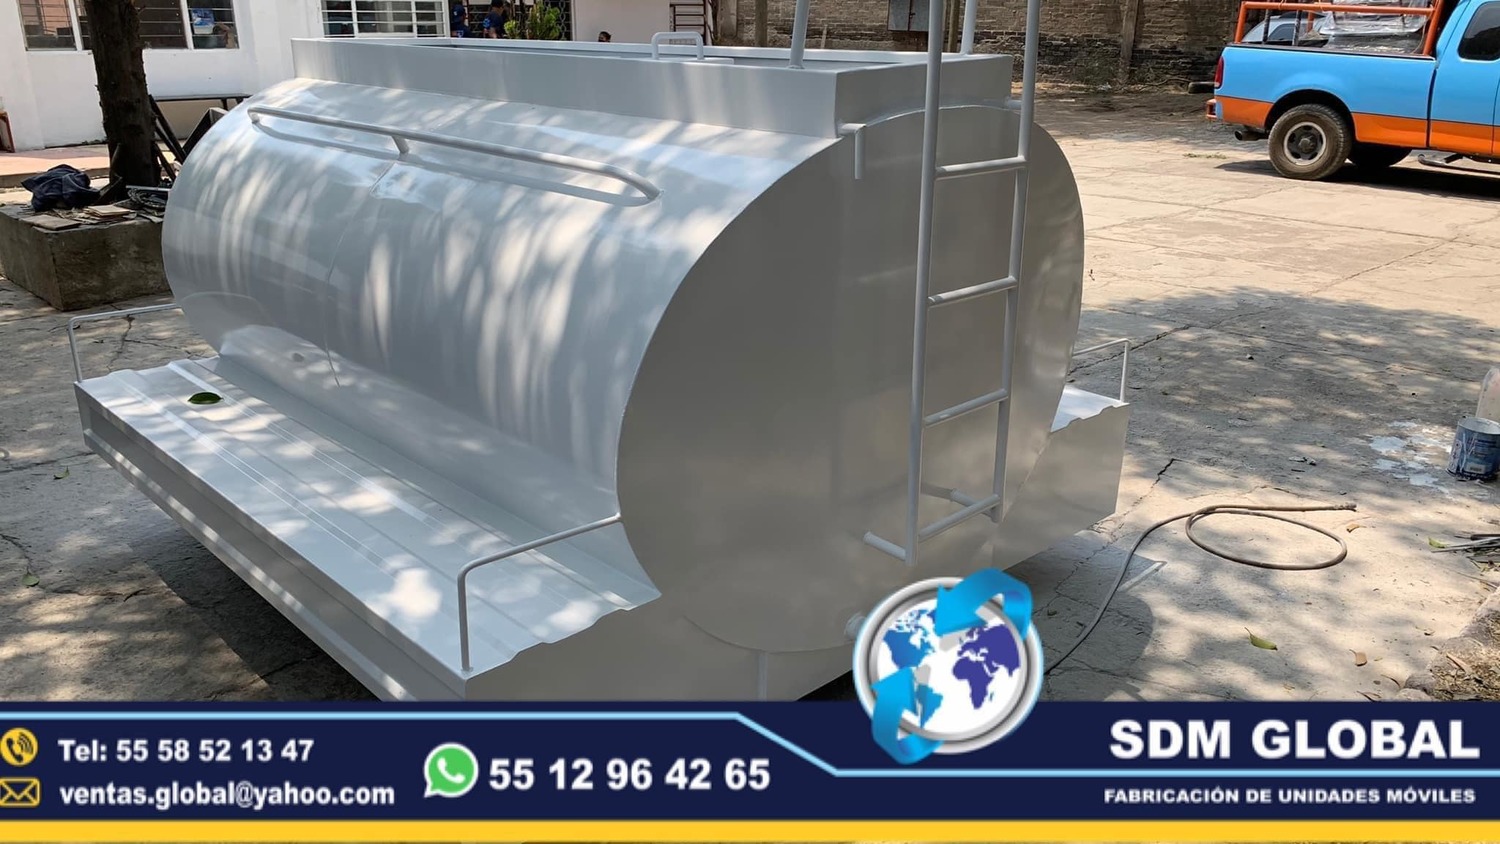 <span style="font-weight: bold;">Fabricacion de Auto tanques de agua de 4,000 litros en Sdm Global</span><br>